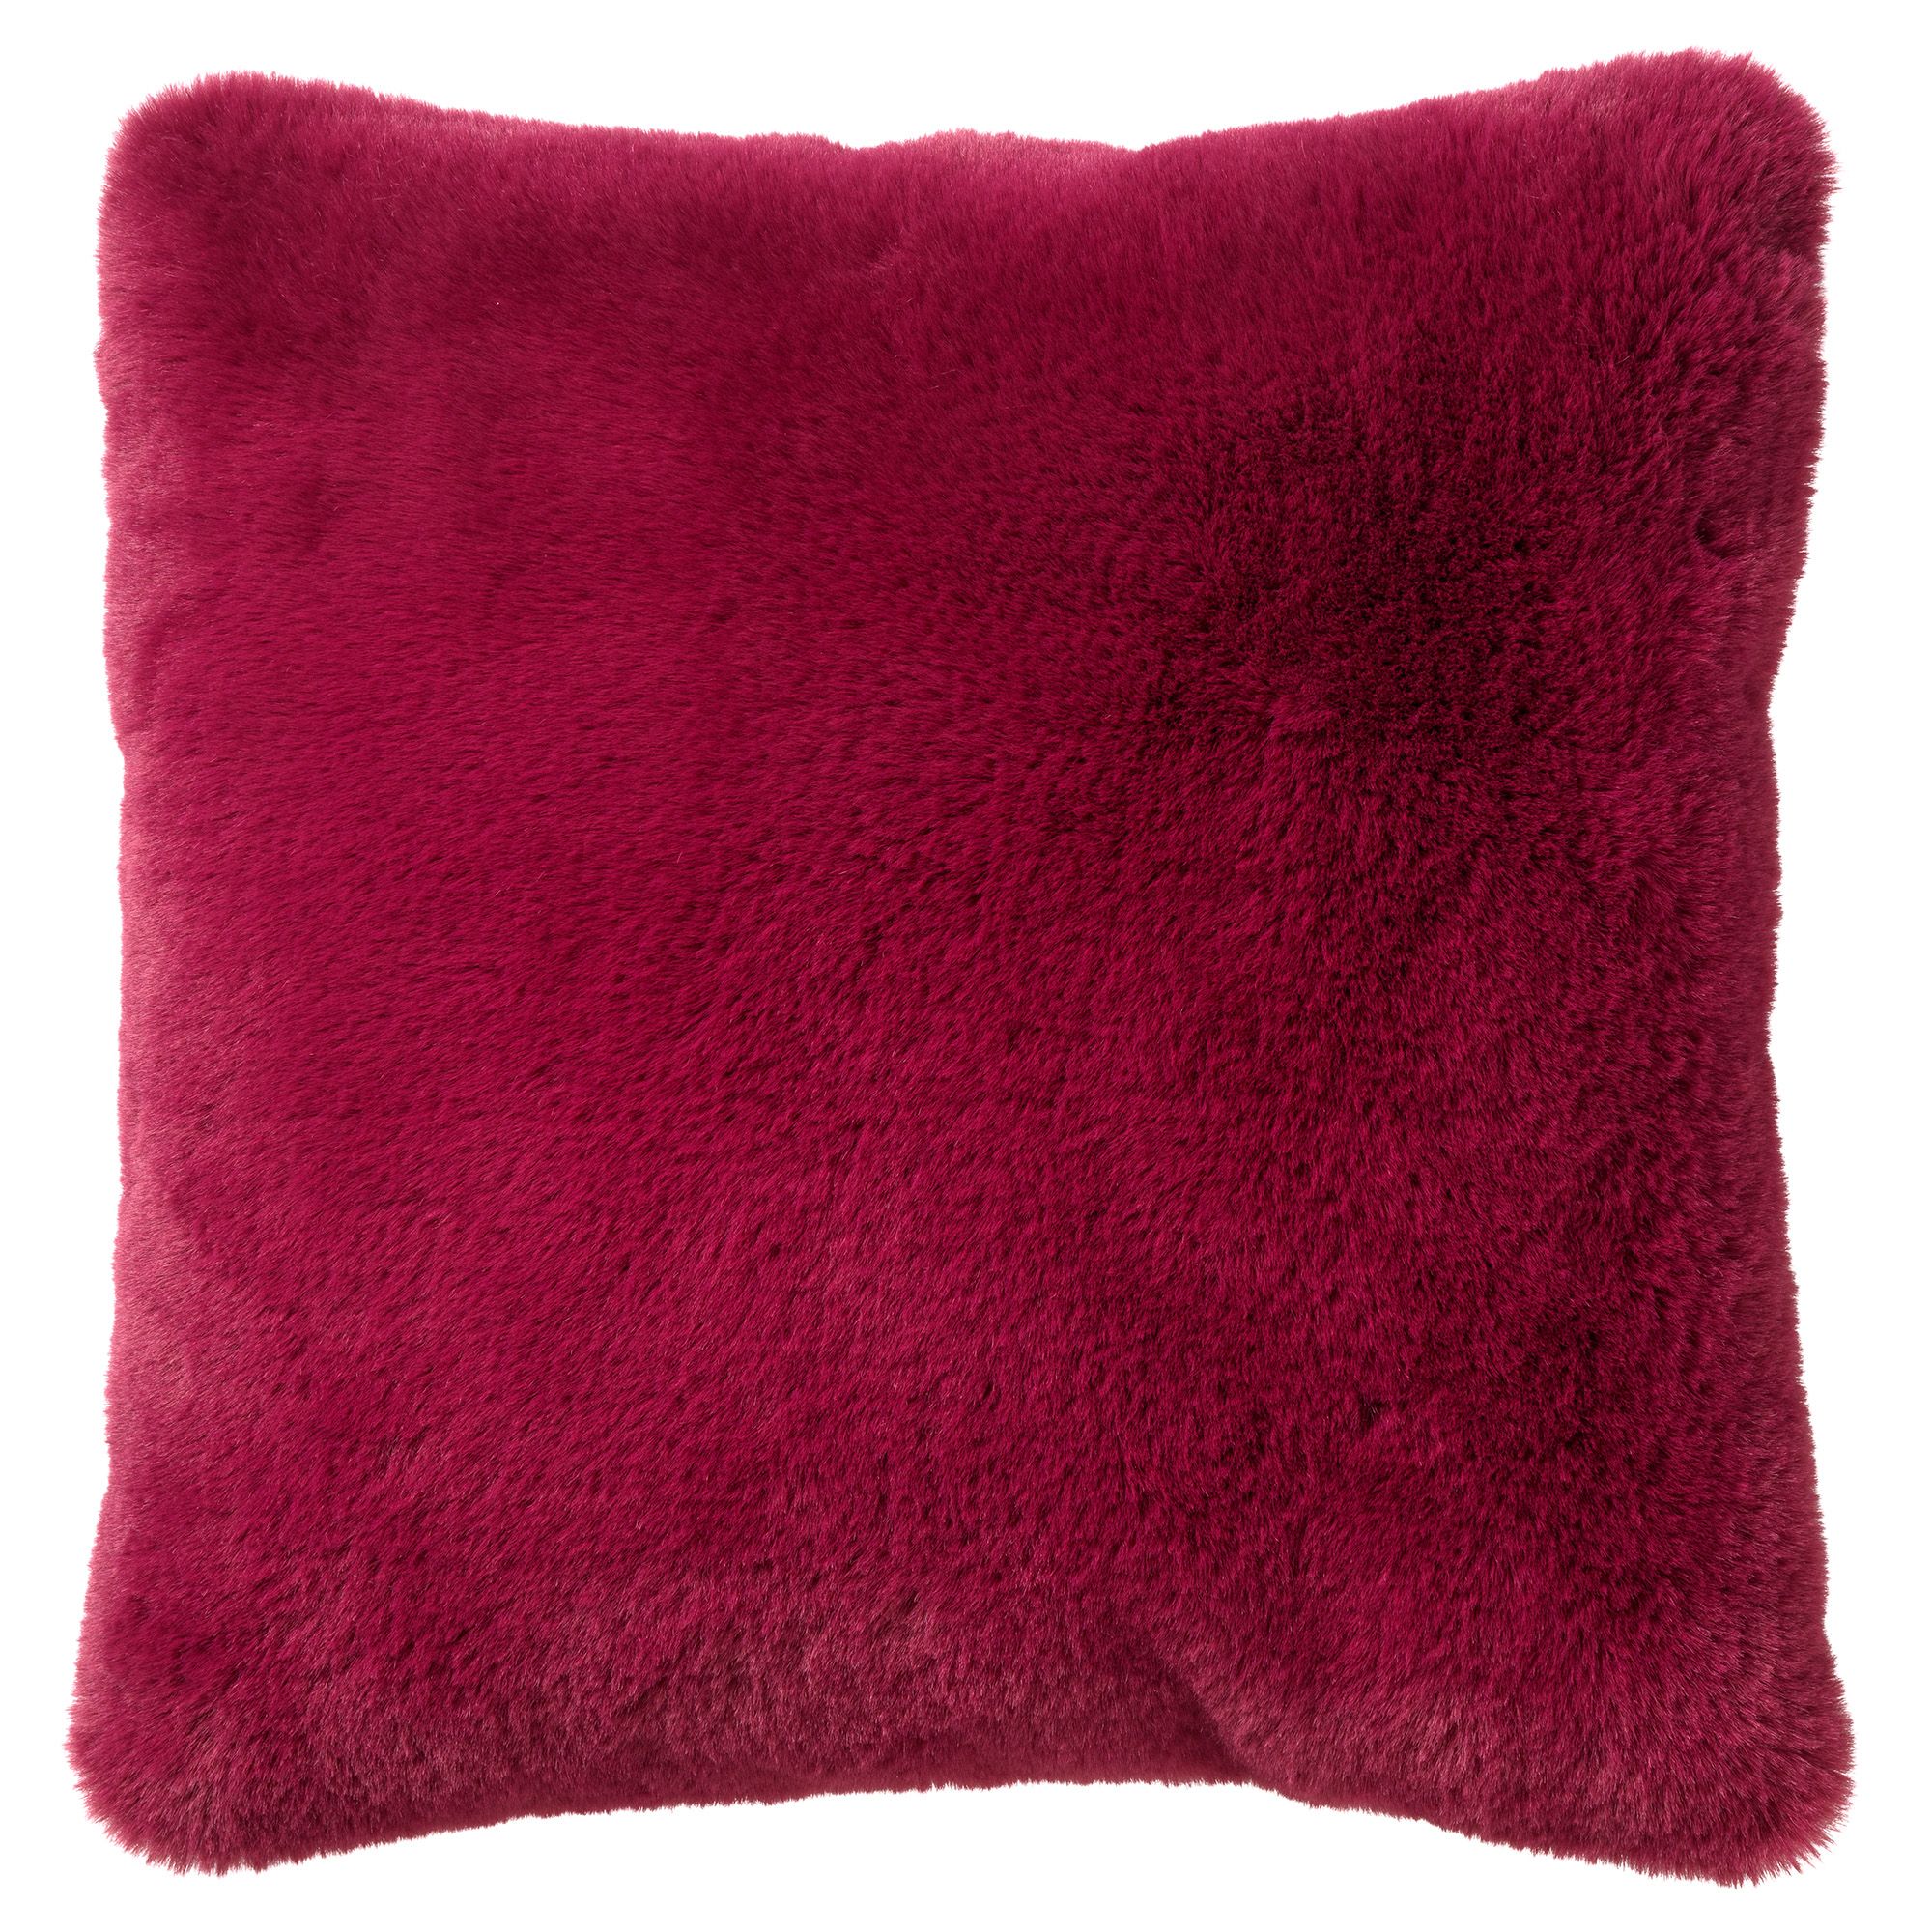 ZAYA - Sierkussen 45x45 cm - bontlook - effen kleur - Red Plum - roze